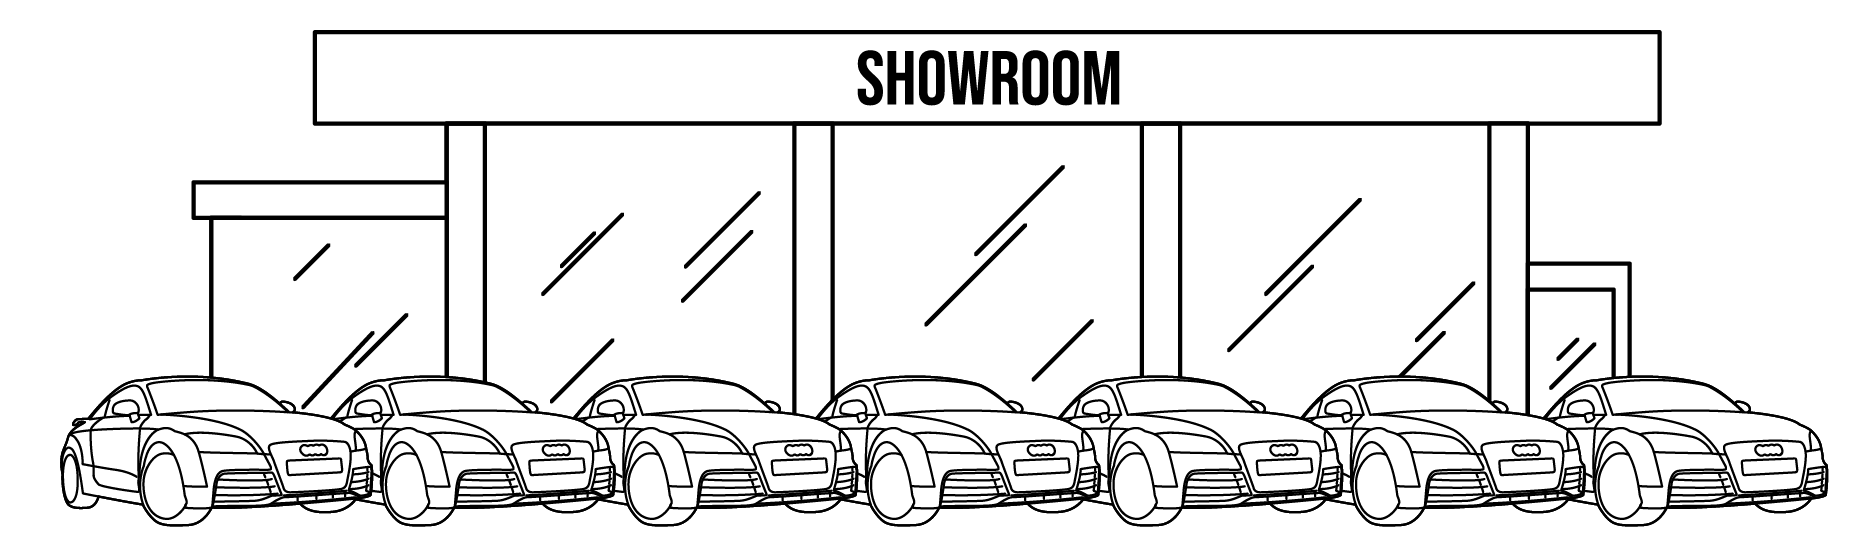 Car showroom illustration